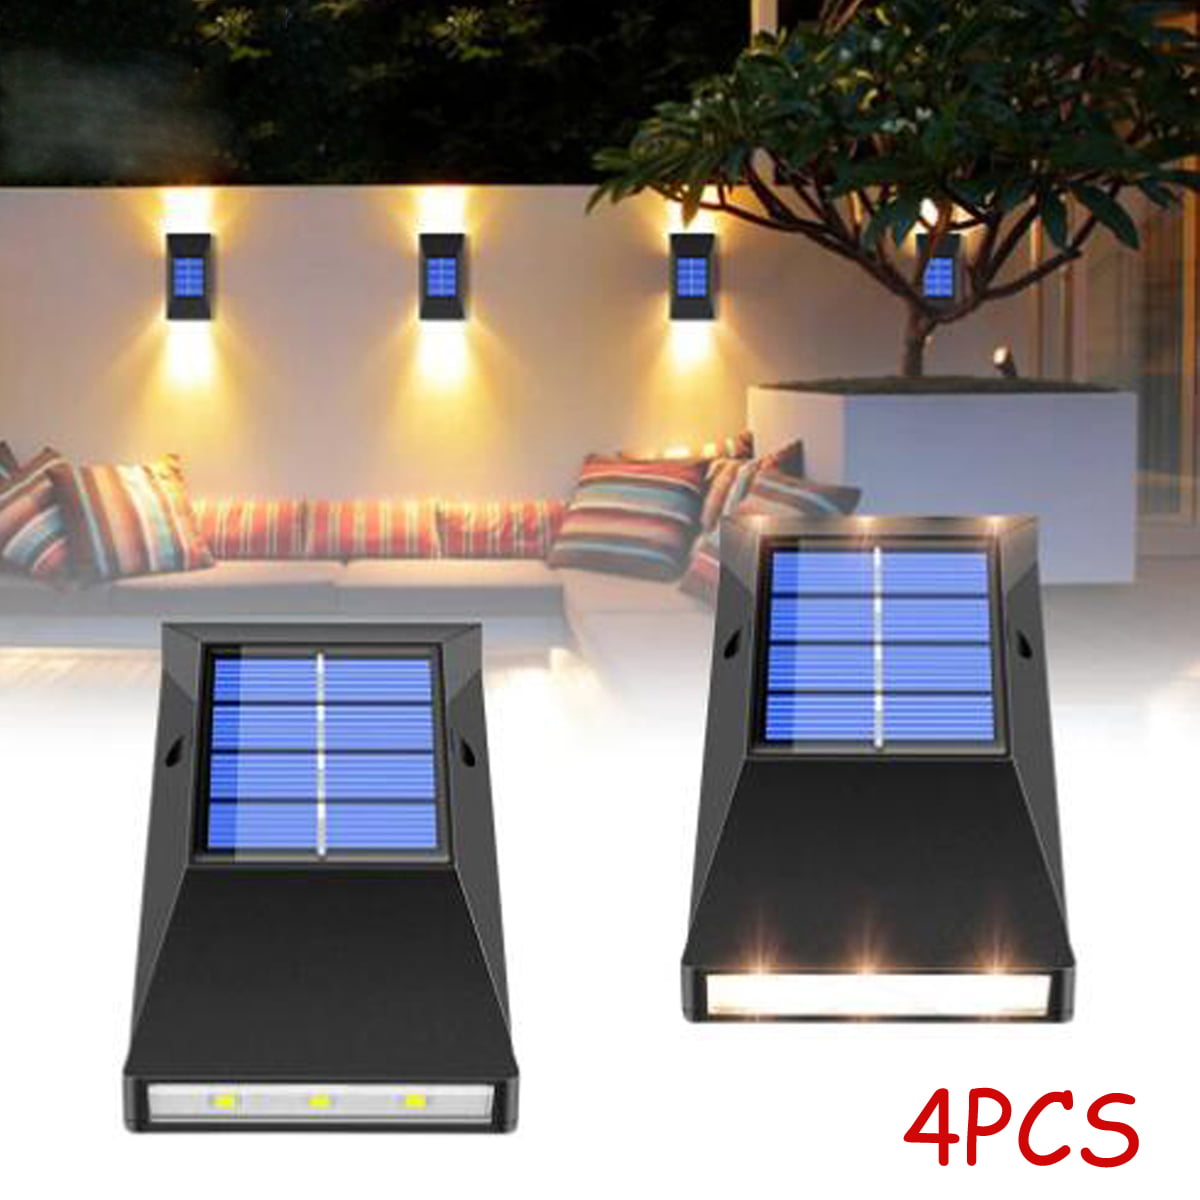 4PCS Solar Power Wall Lights 6LED Door Fence Lamp Outdoor Path Gutter Waterproof